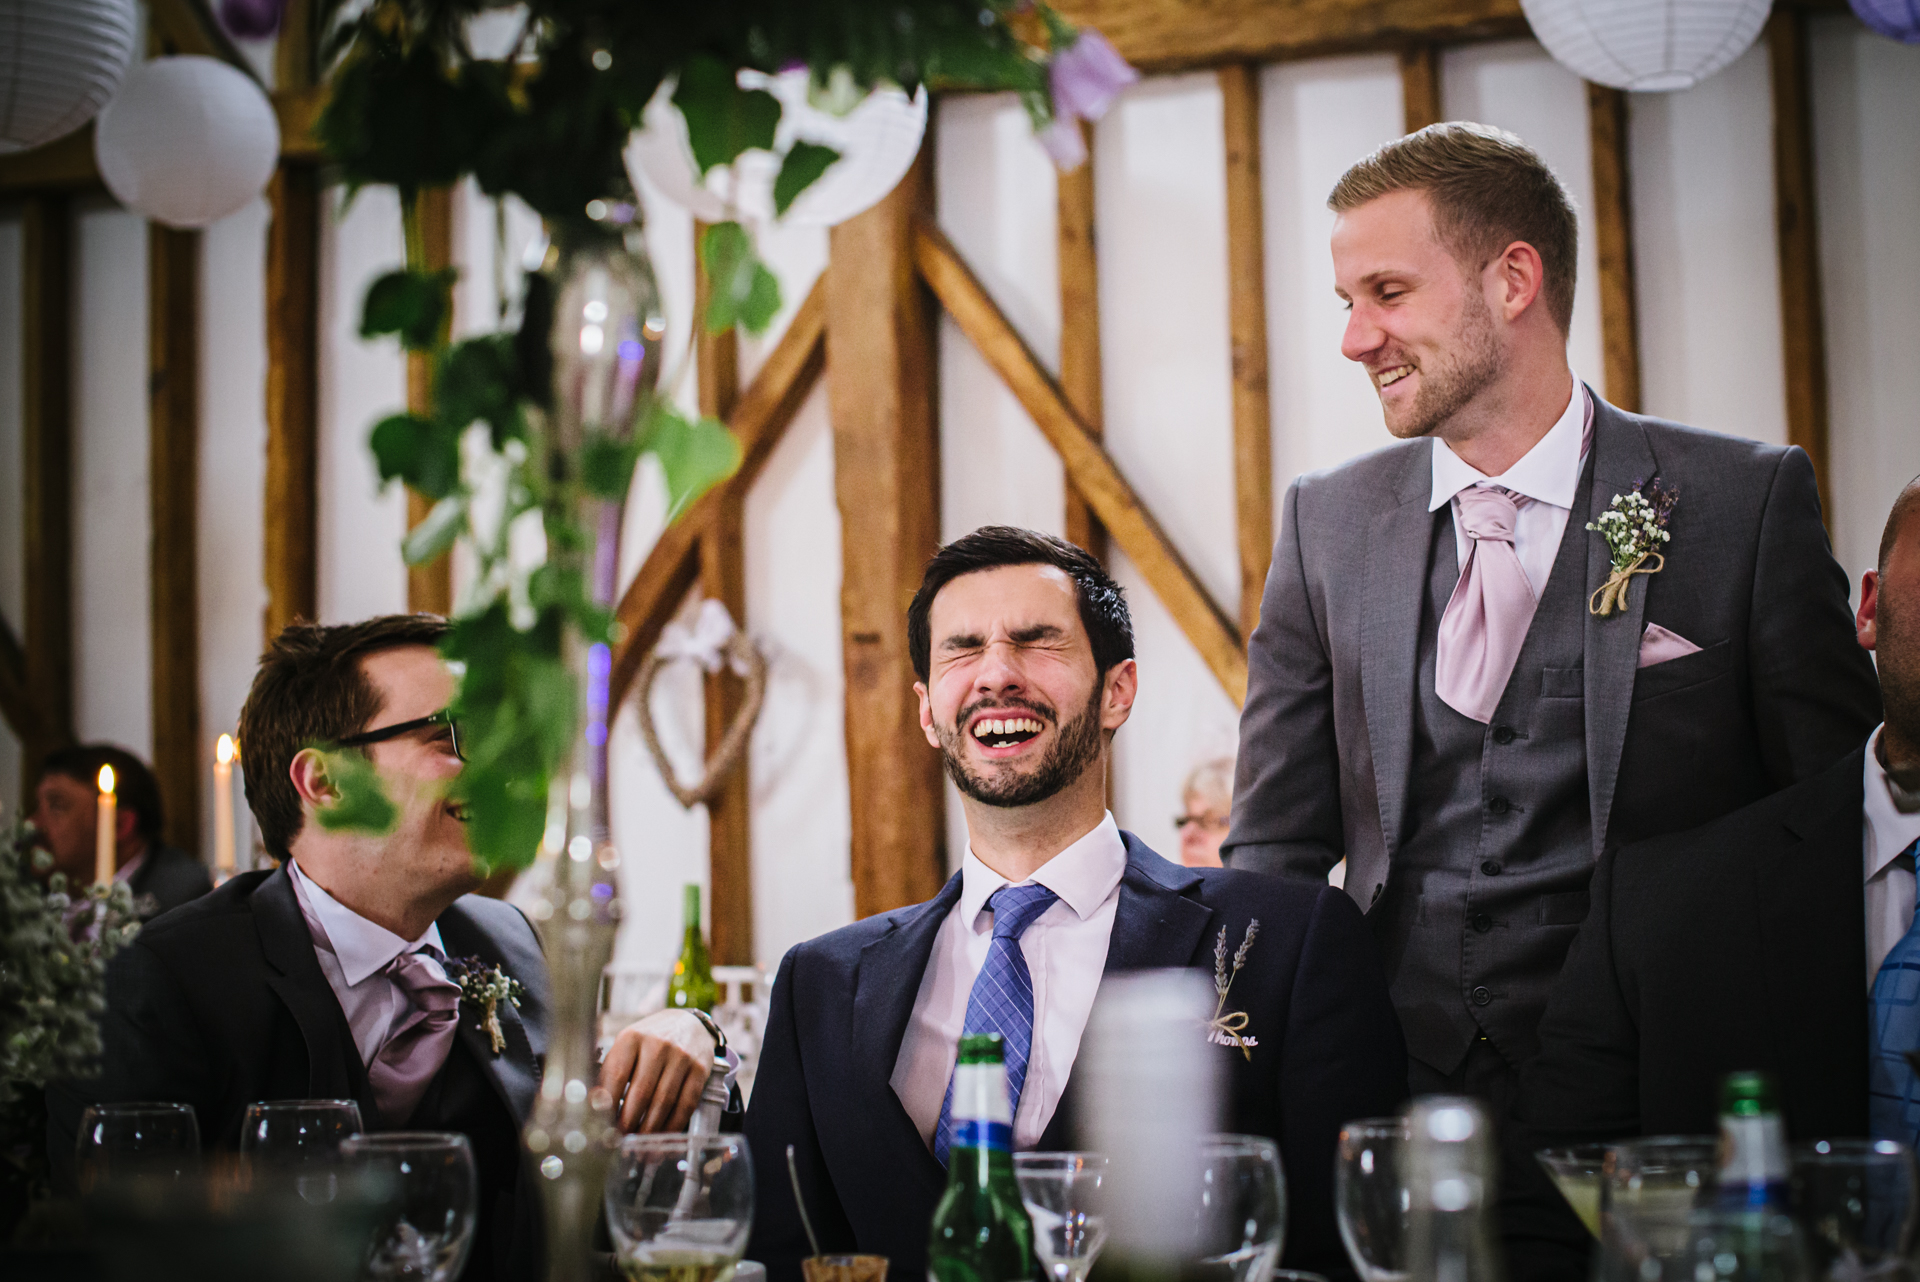 Best men share a joke at Milling Barn wedding reception